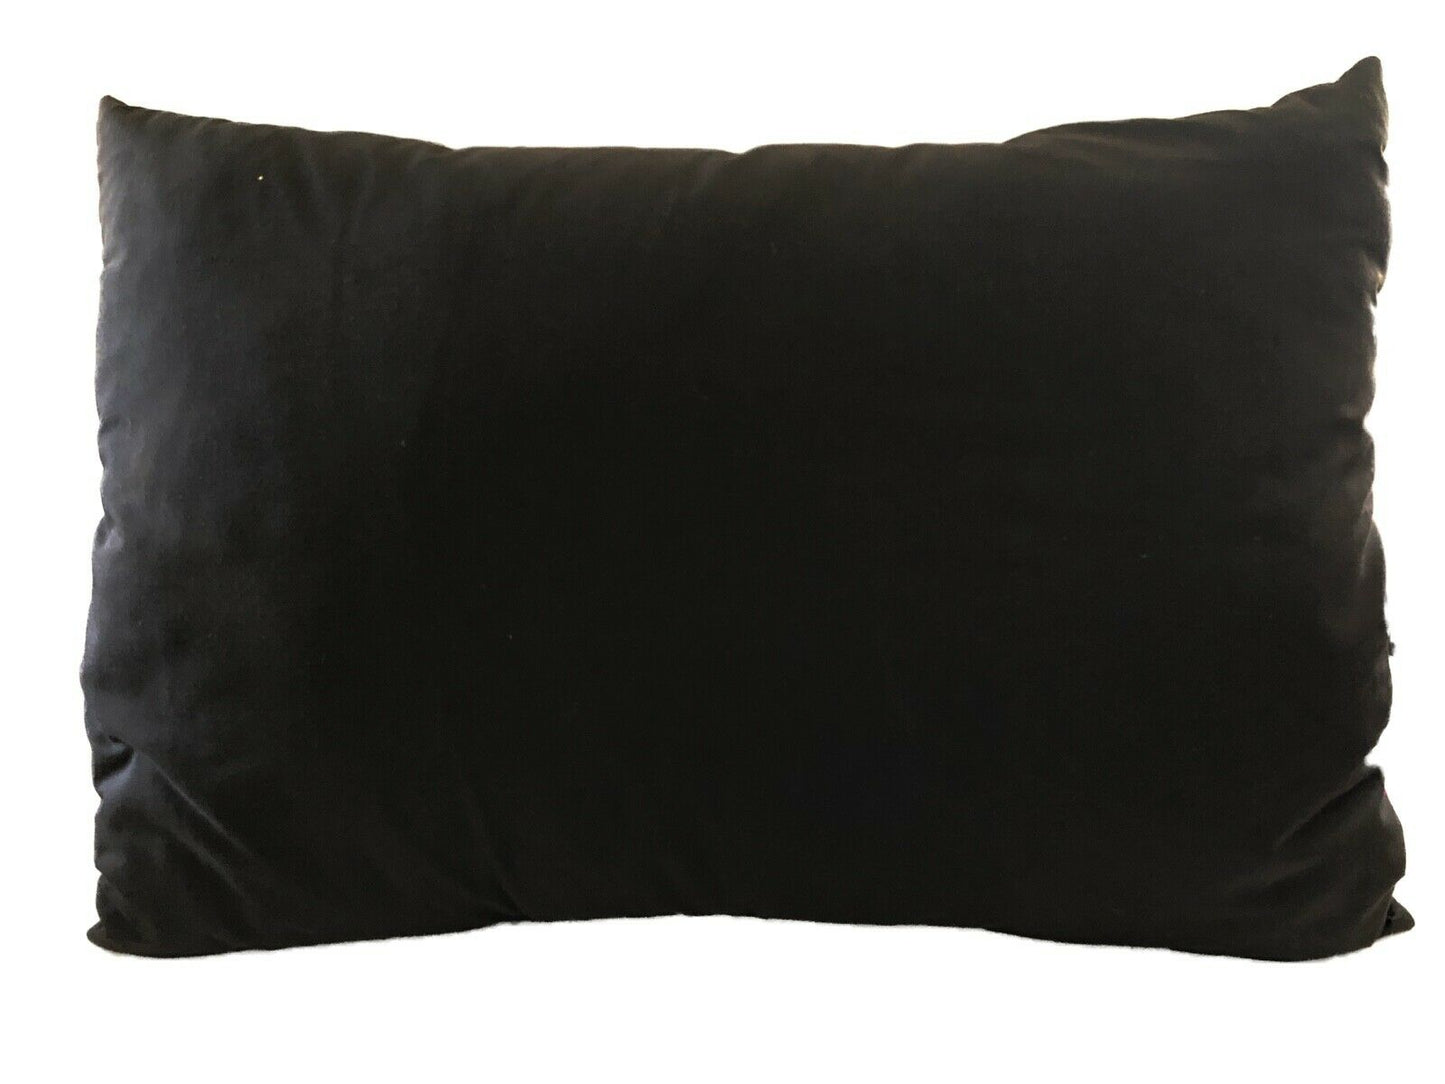 #279 Stunning Old Uzbeck  Suzani Lg Lumbar Pillow 25.5" by 18"